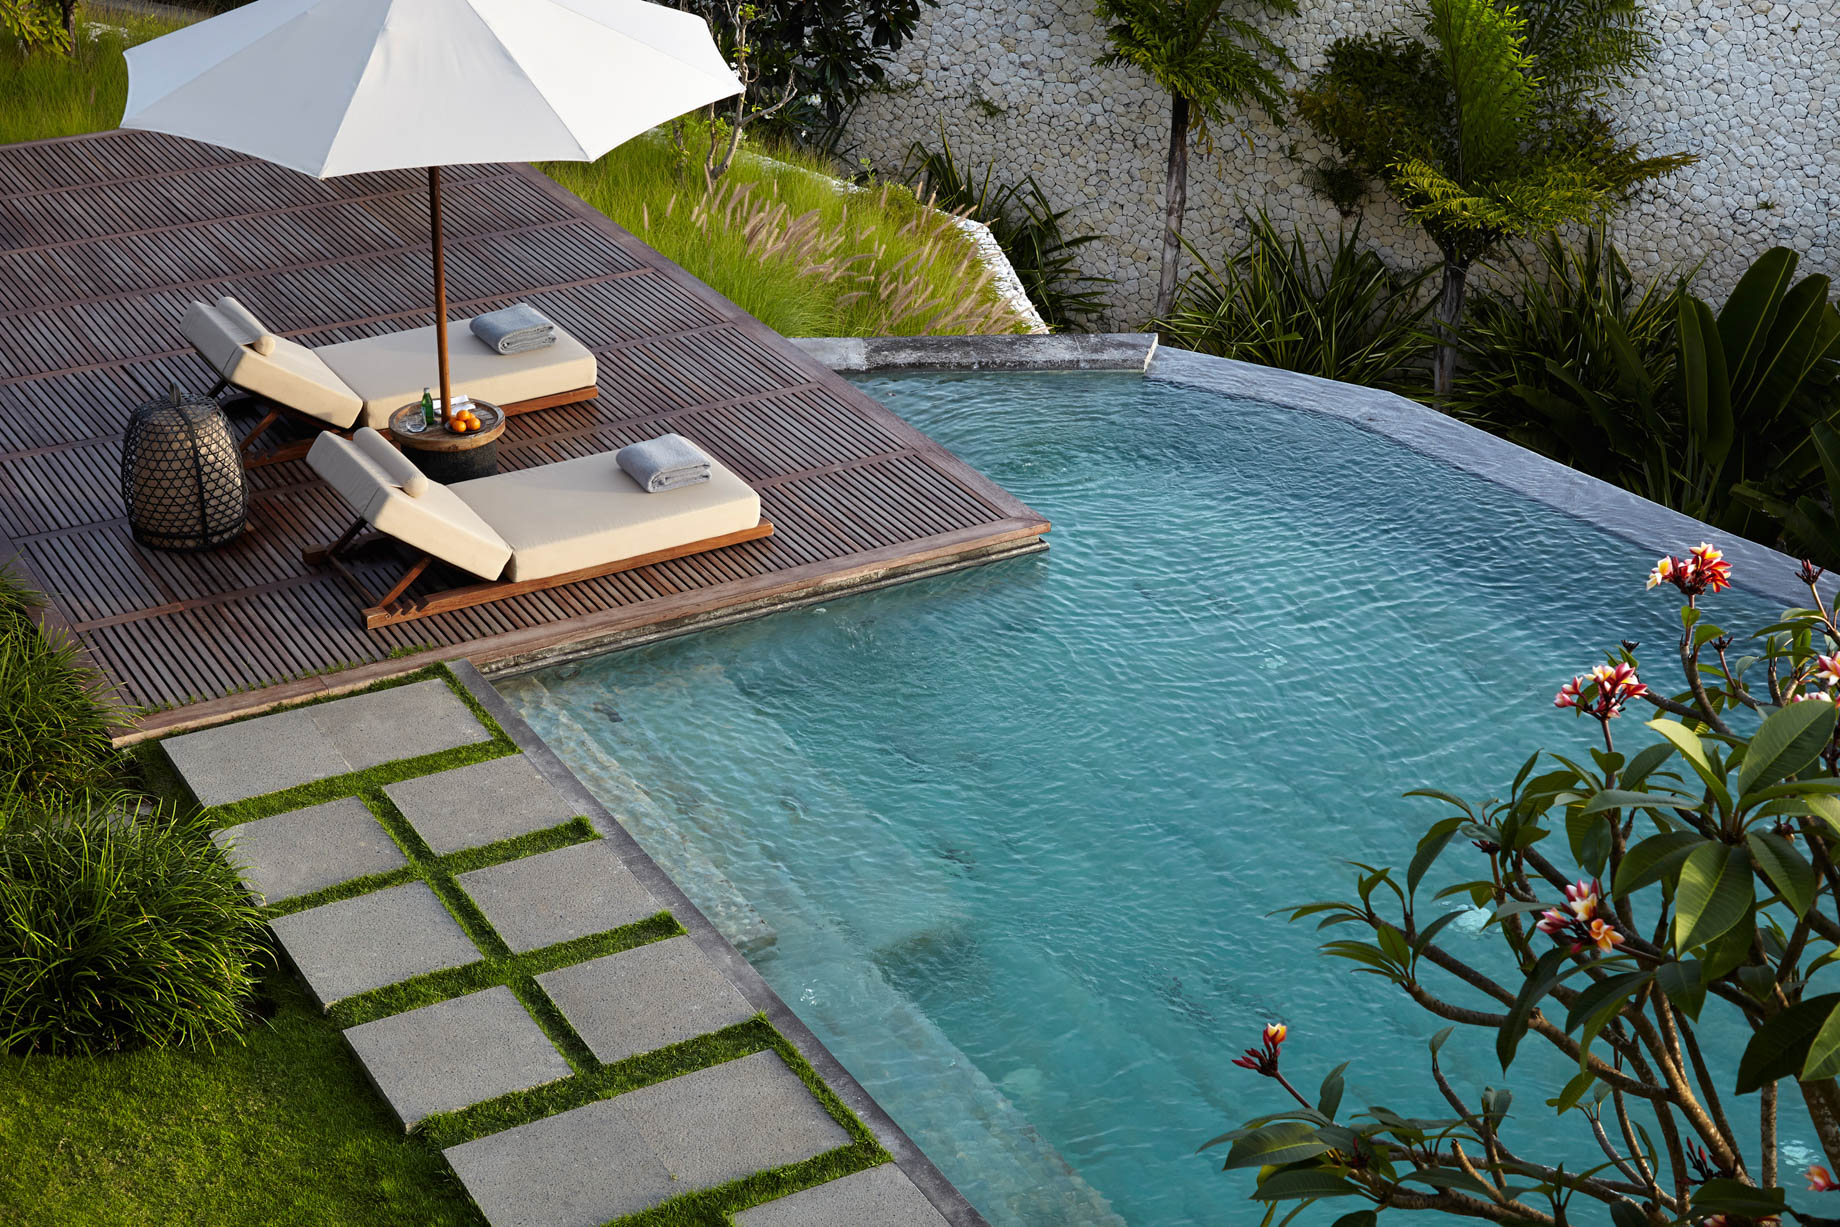 Bvlgari Resort Bali – Uluwatu, Bali, Indonesia – The Mansions Pool Deck